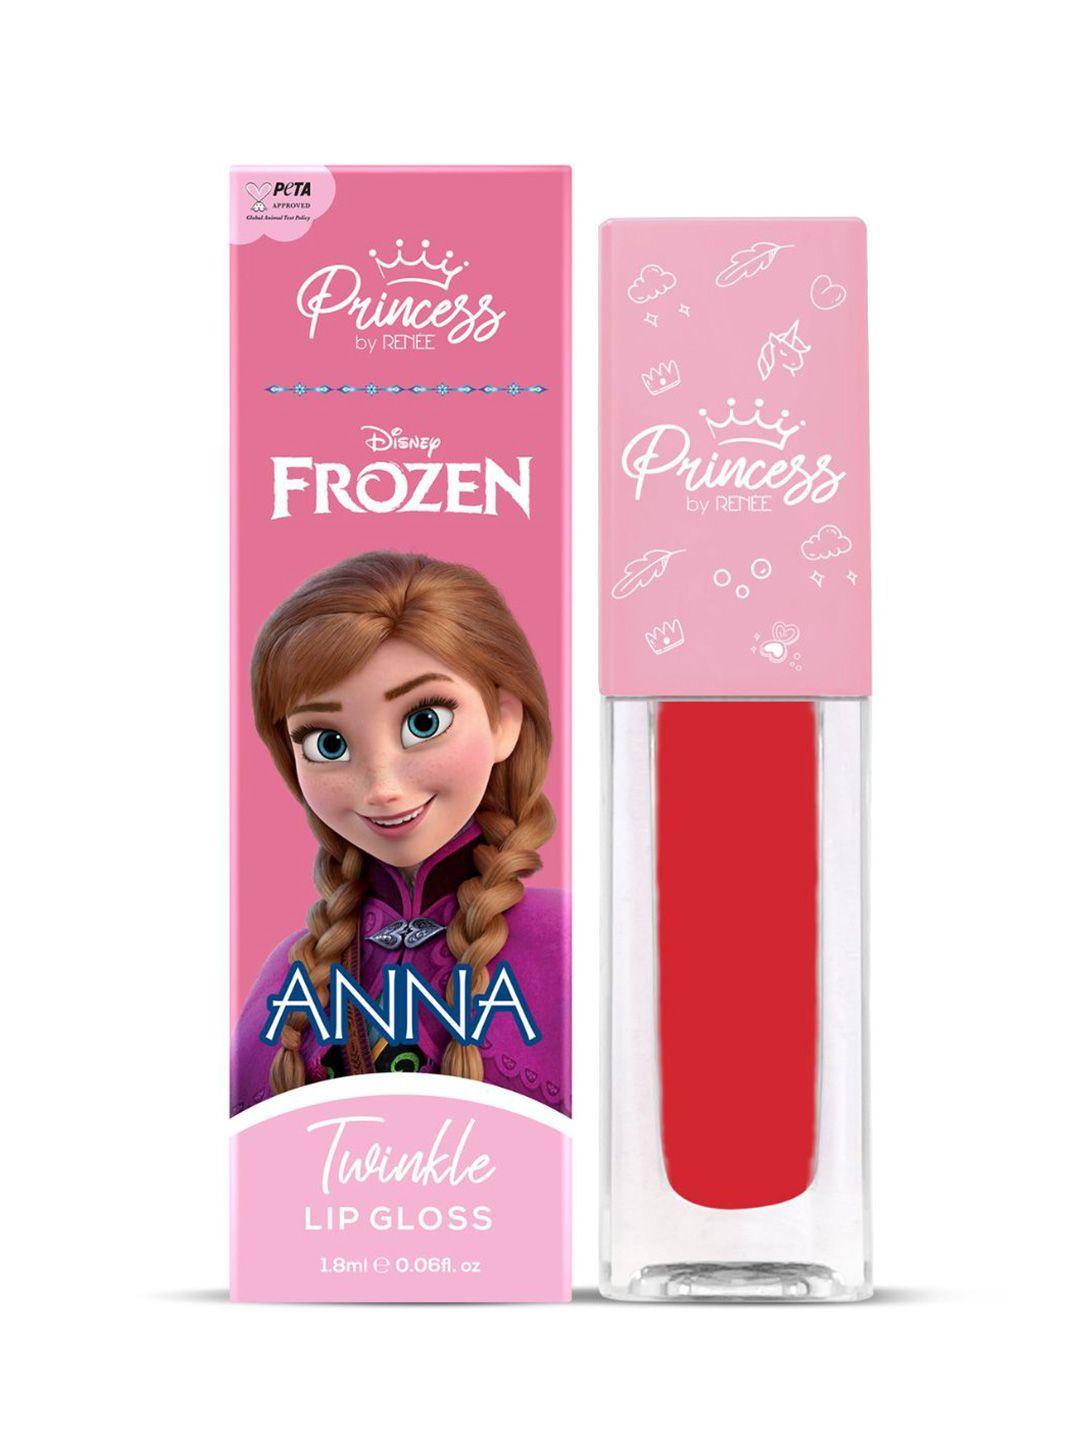 renee princess disney frozen twinkle lip gloss 1.8ml - anna red